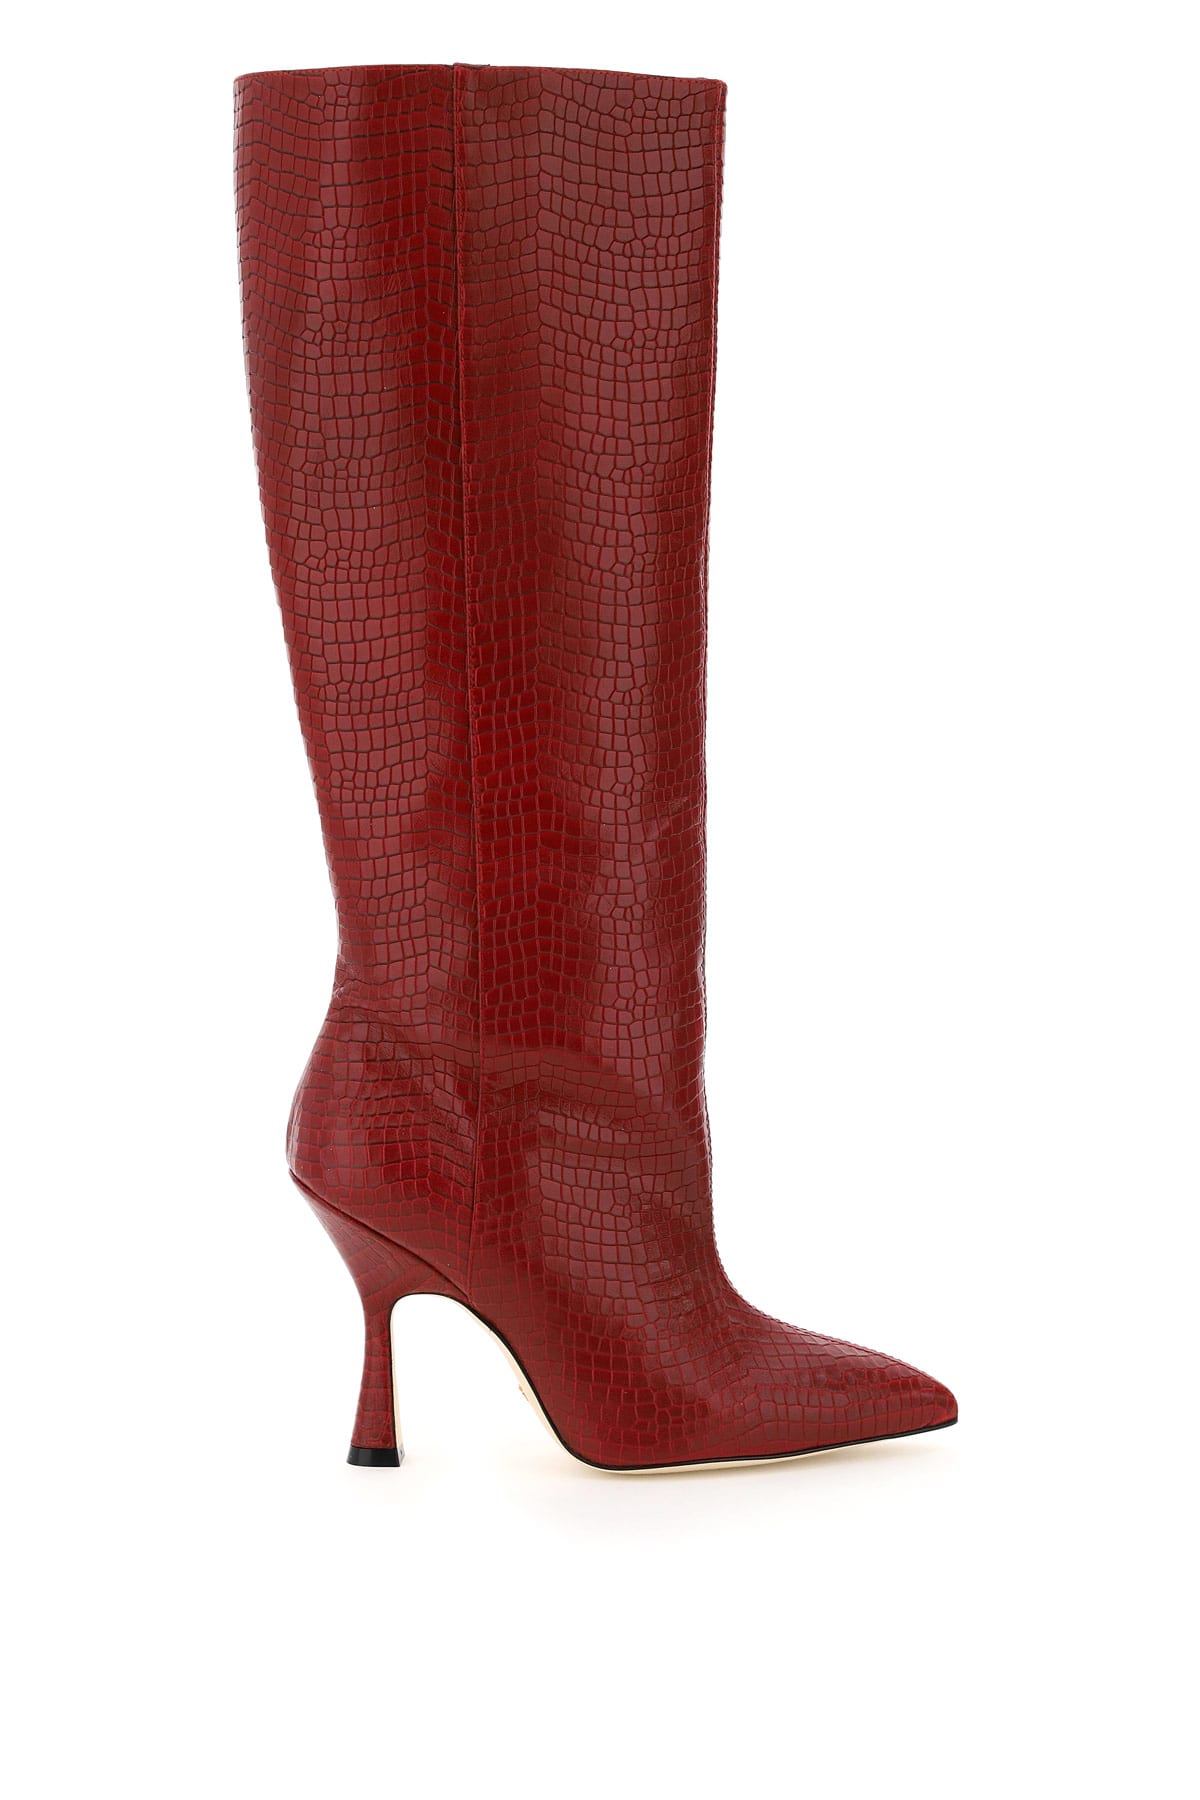 Buy Stuart Weitzman Parton Crocodile Embossed Leather Boots online, shop Stuart Weitzman shoes with free shipping